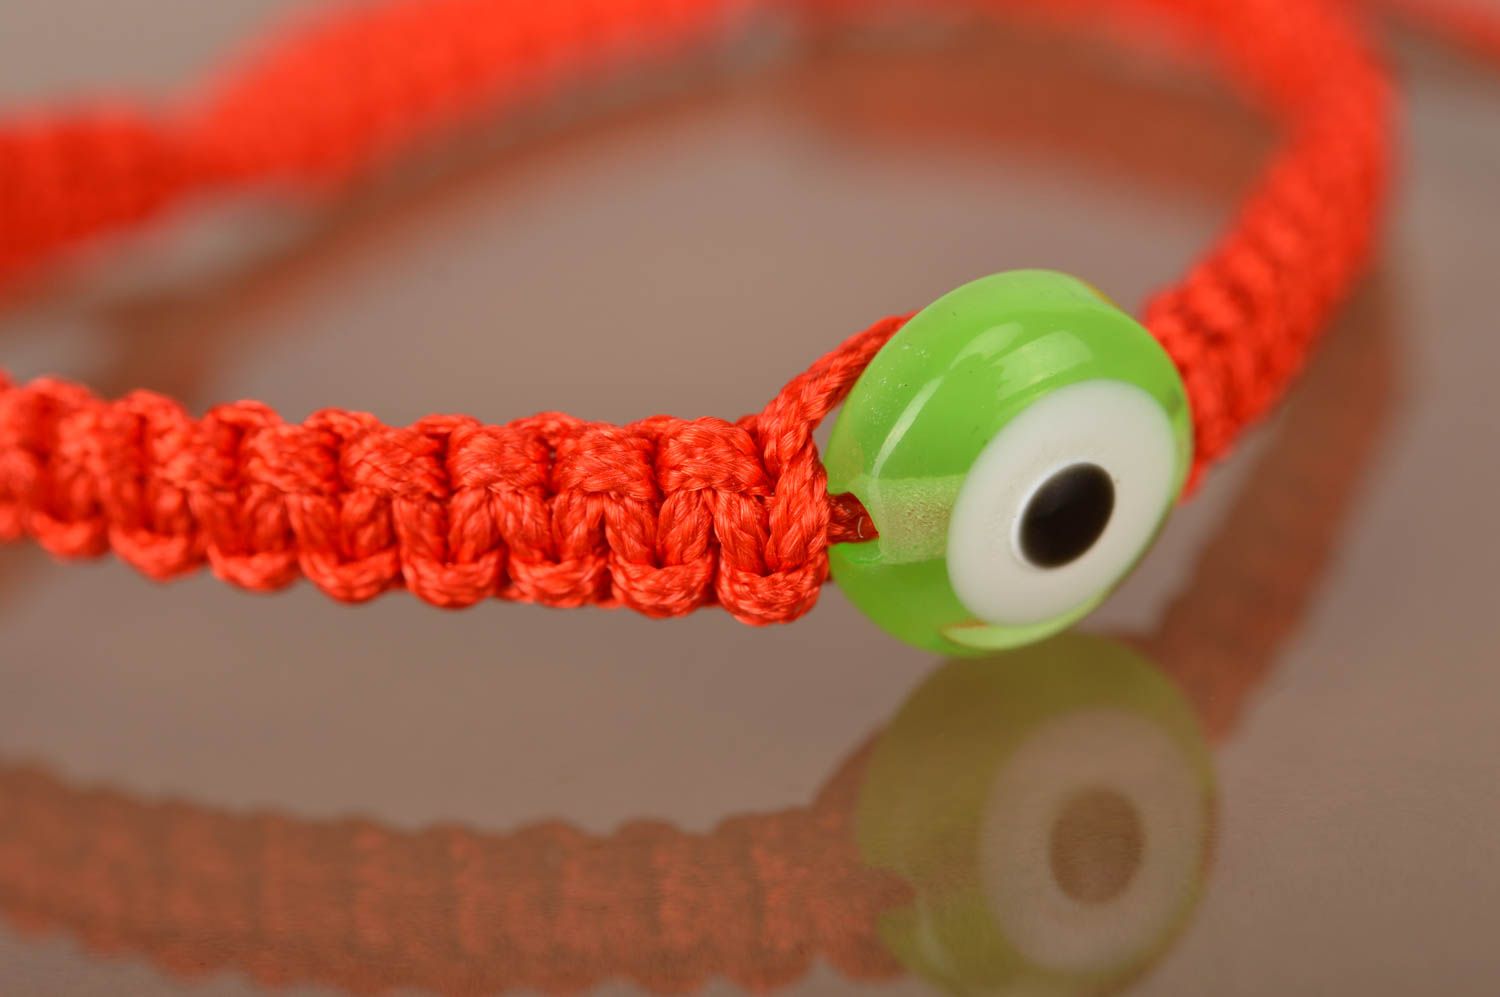 Childrens handmade braided wrist bracelet friendship bracelet designs gift ideas photo 2